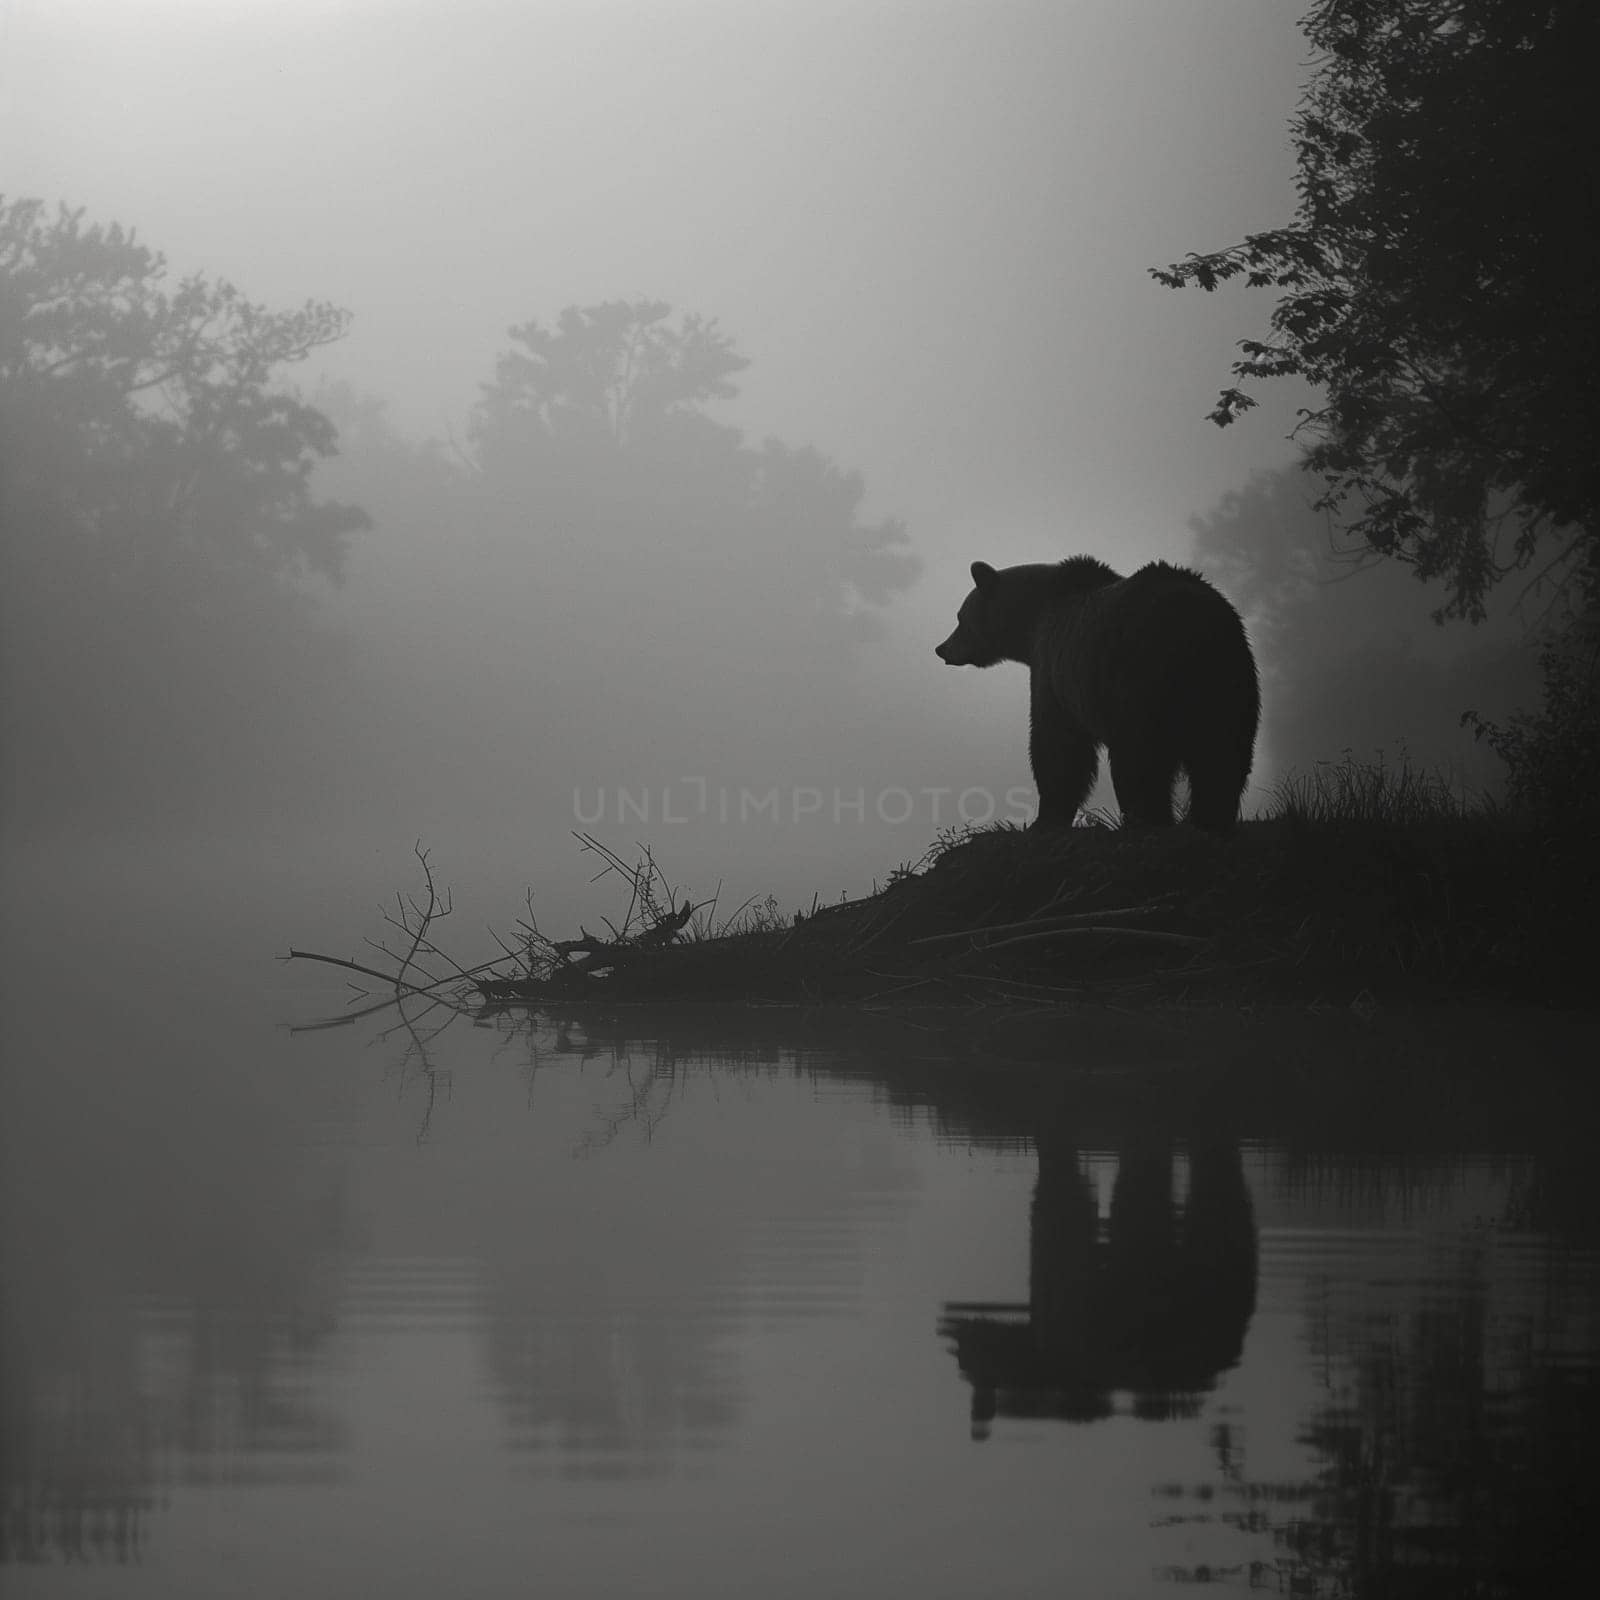 Gloomy photo of a bear on the river. High quality photo